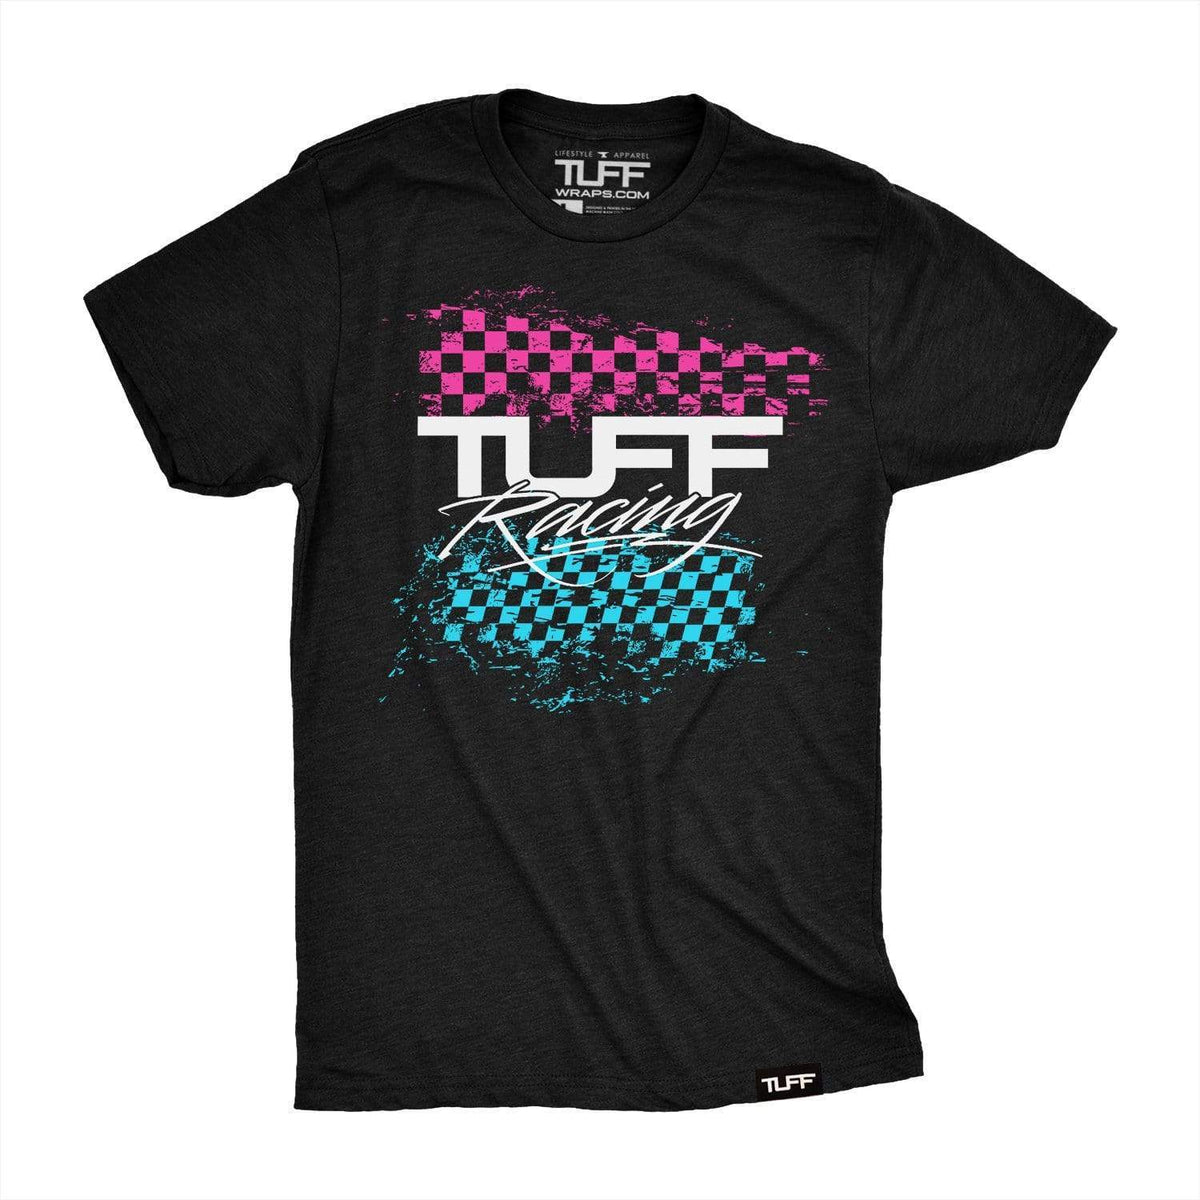 TUFF Racing Tee S / Black V3 TuffWraps.com